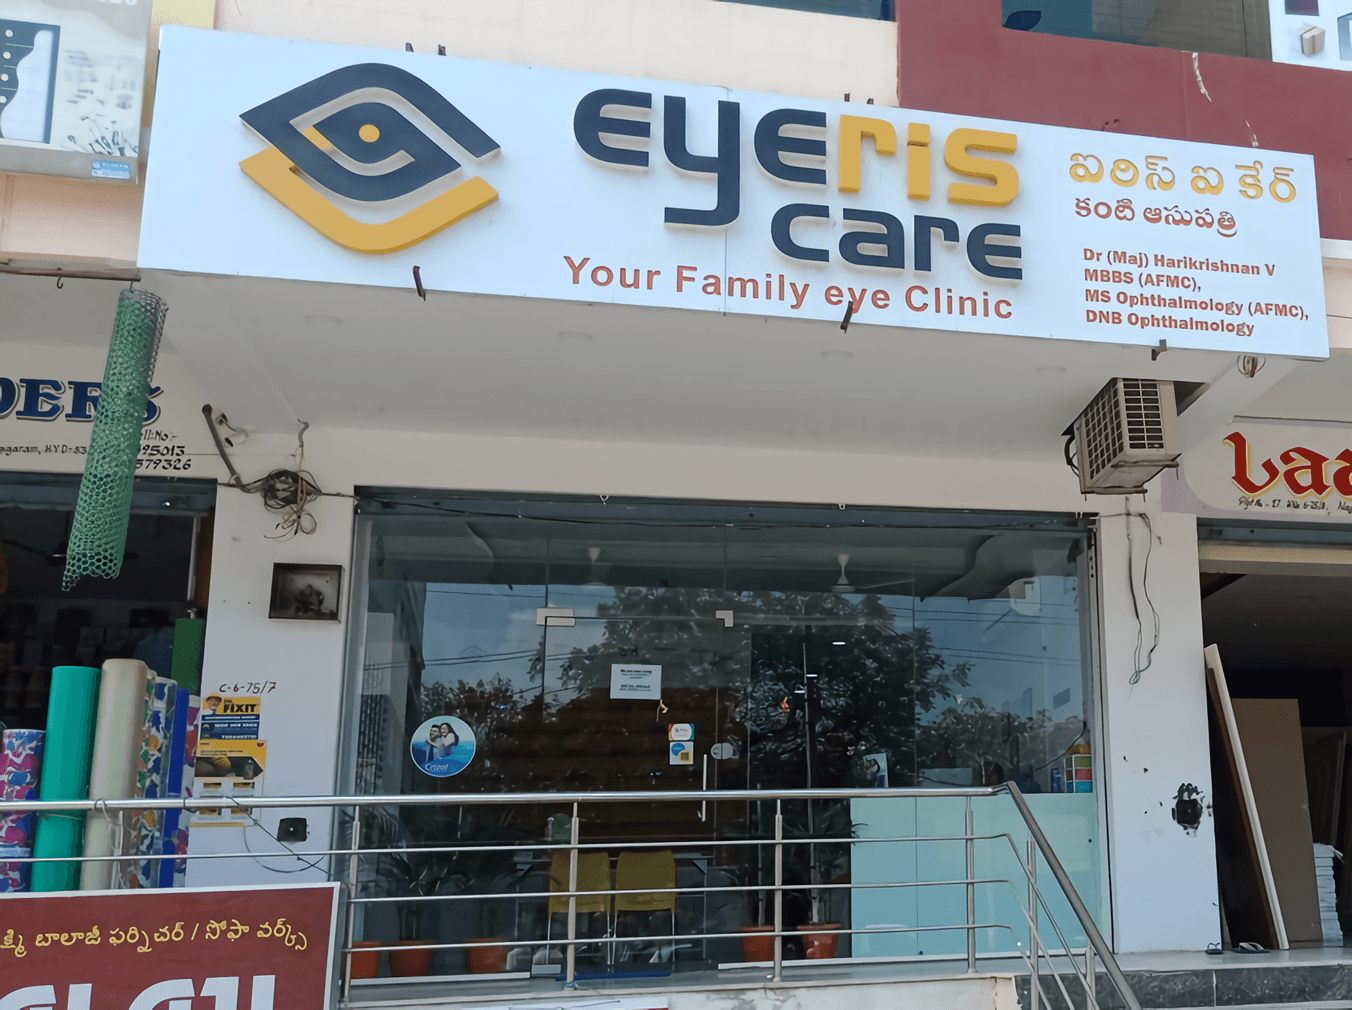 Eyeris Care